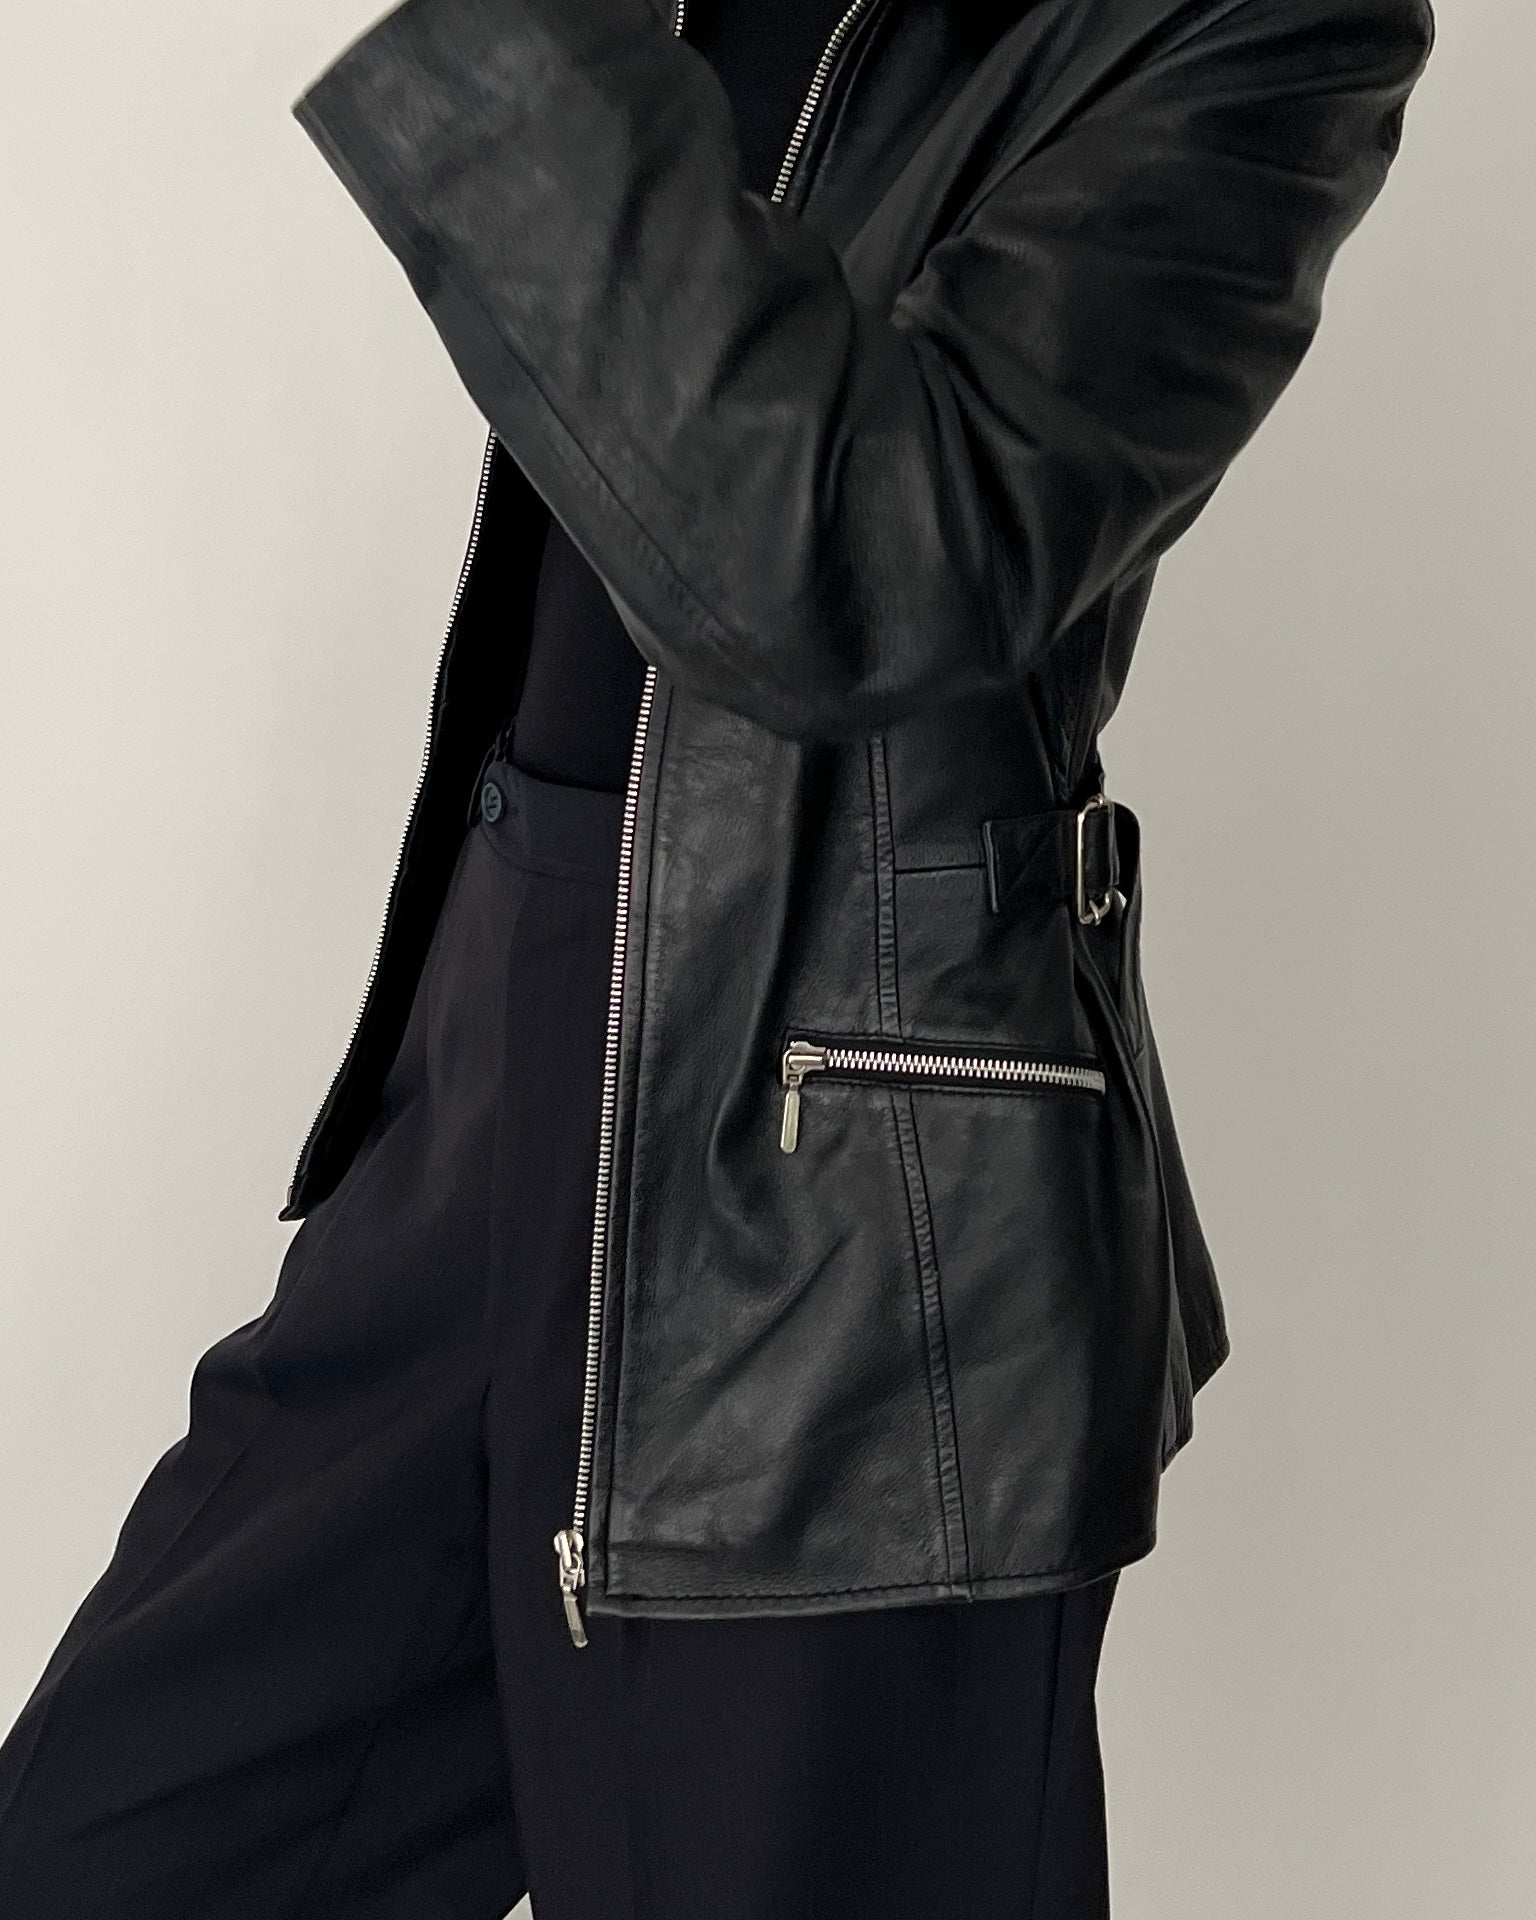 Vintage Givenchy Black Leather Jacket